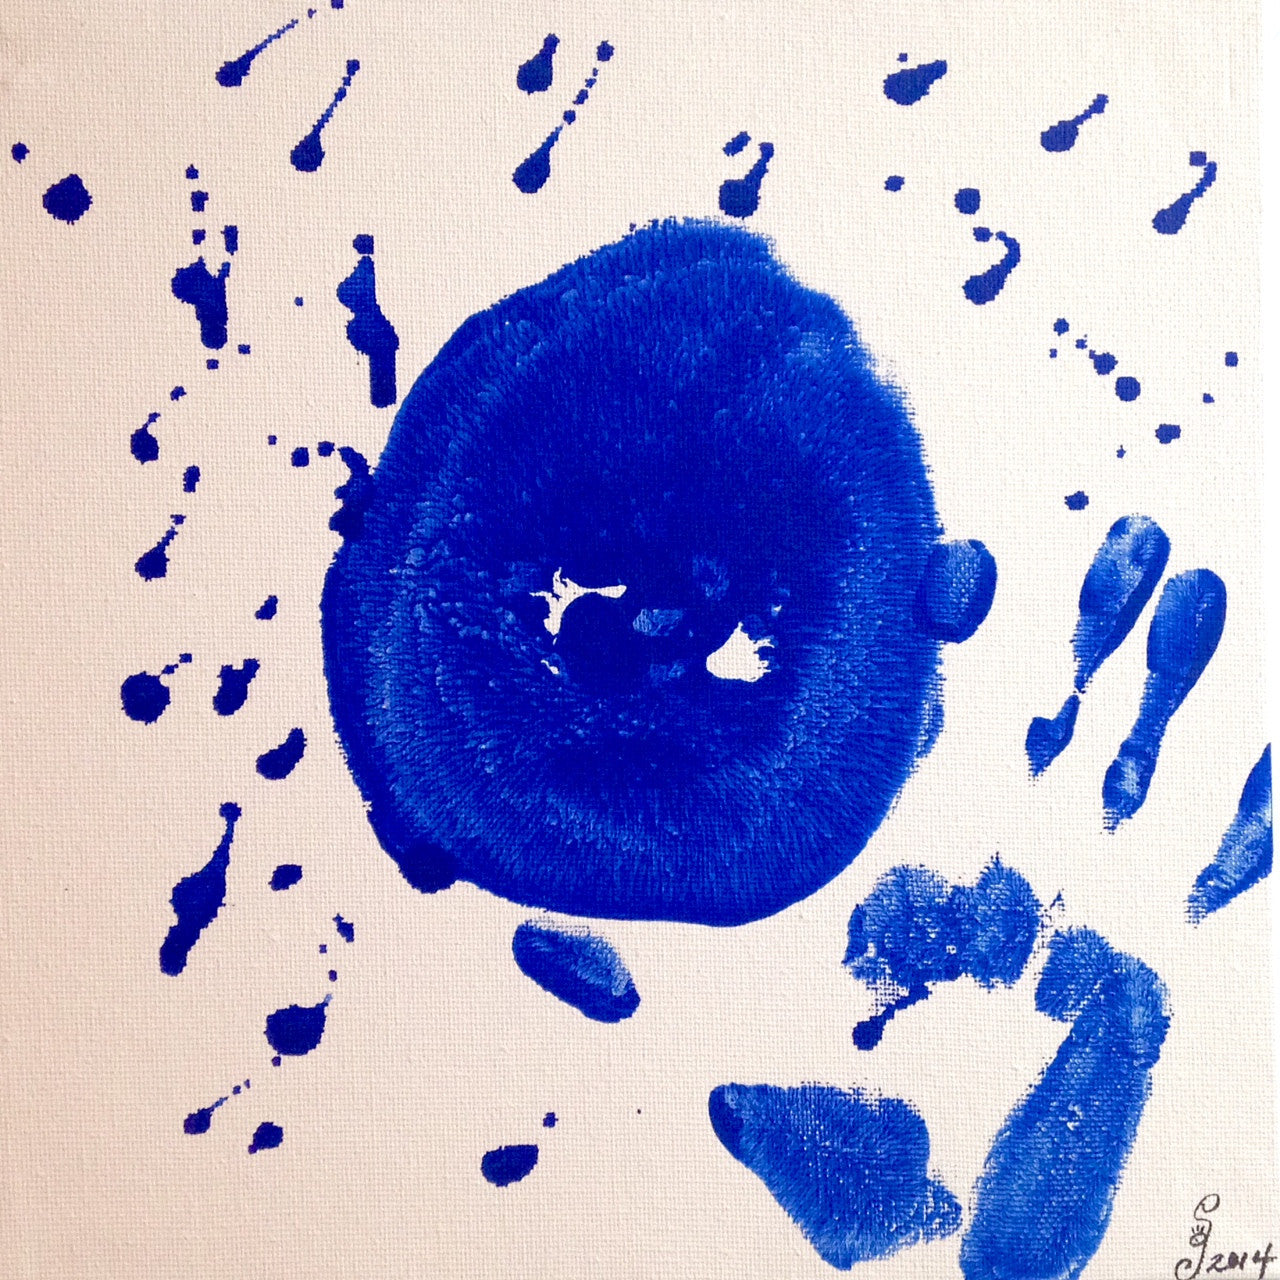 Day 54- Mono-Boob- Tribute to Yves Klein – Day of the Artist